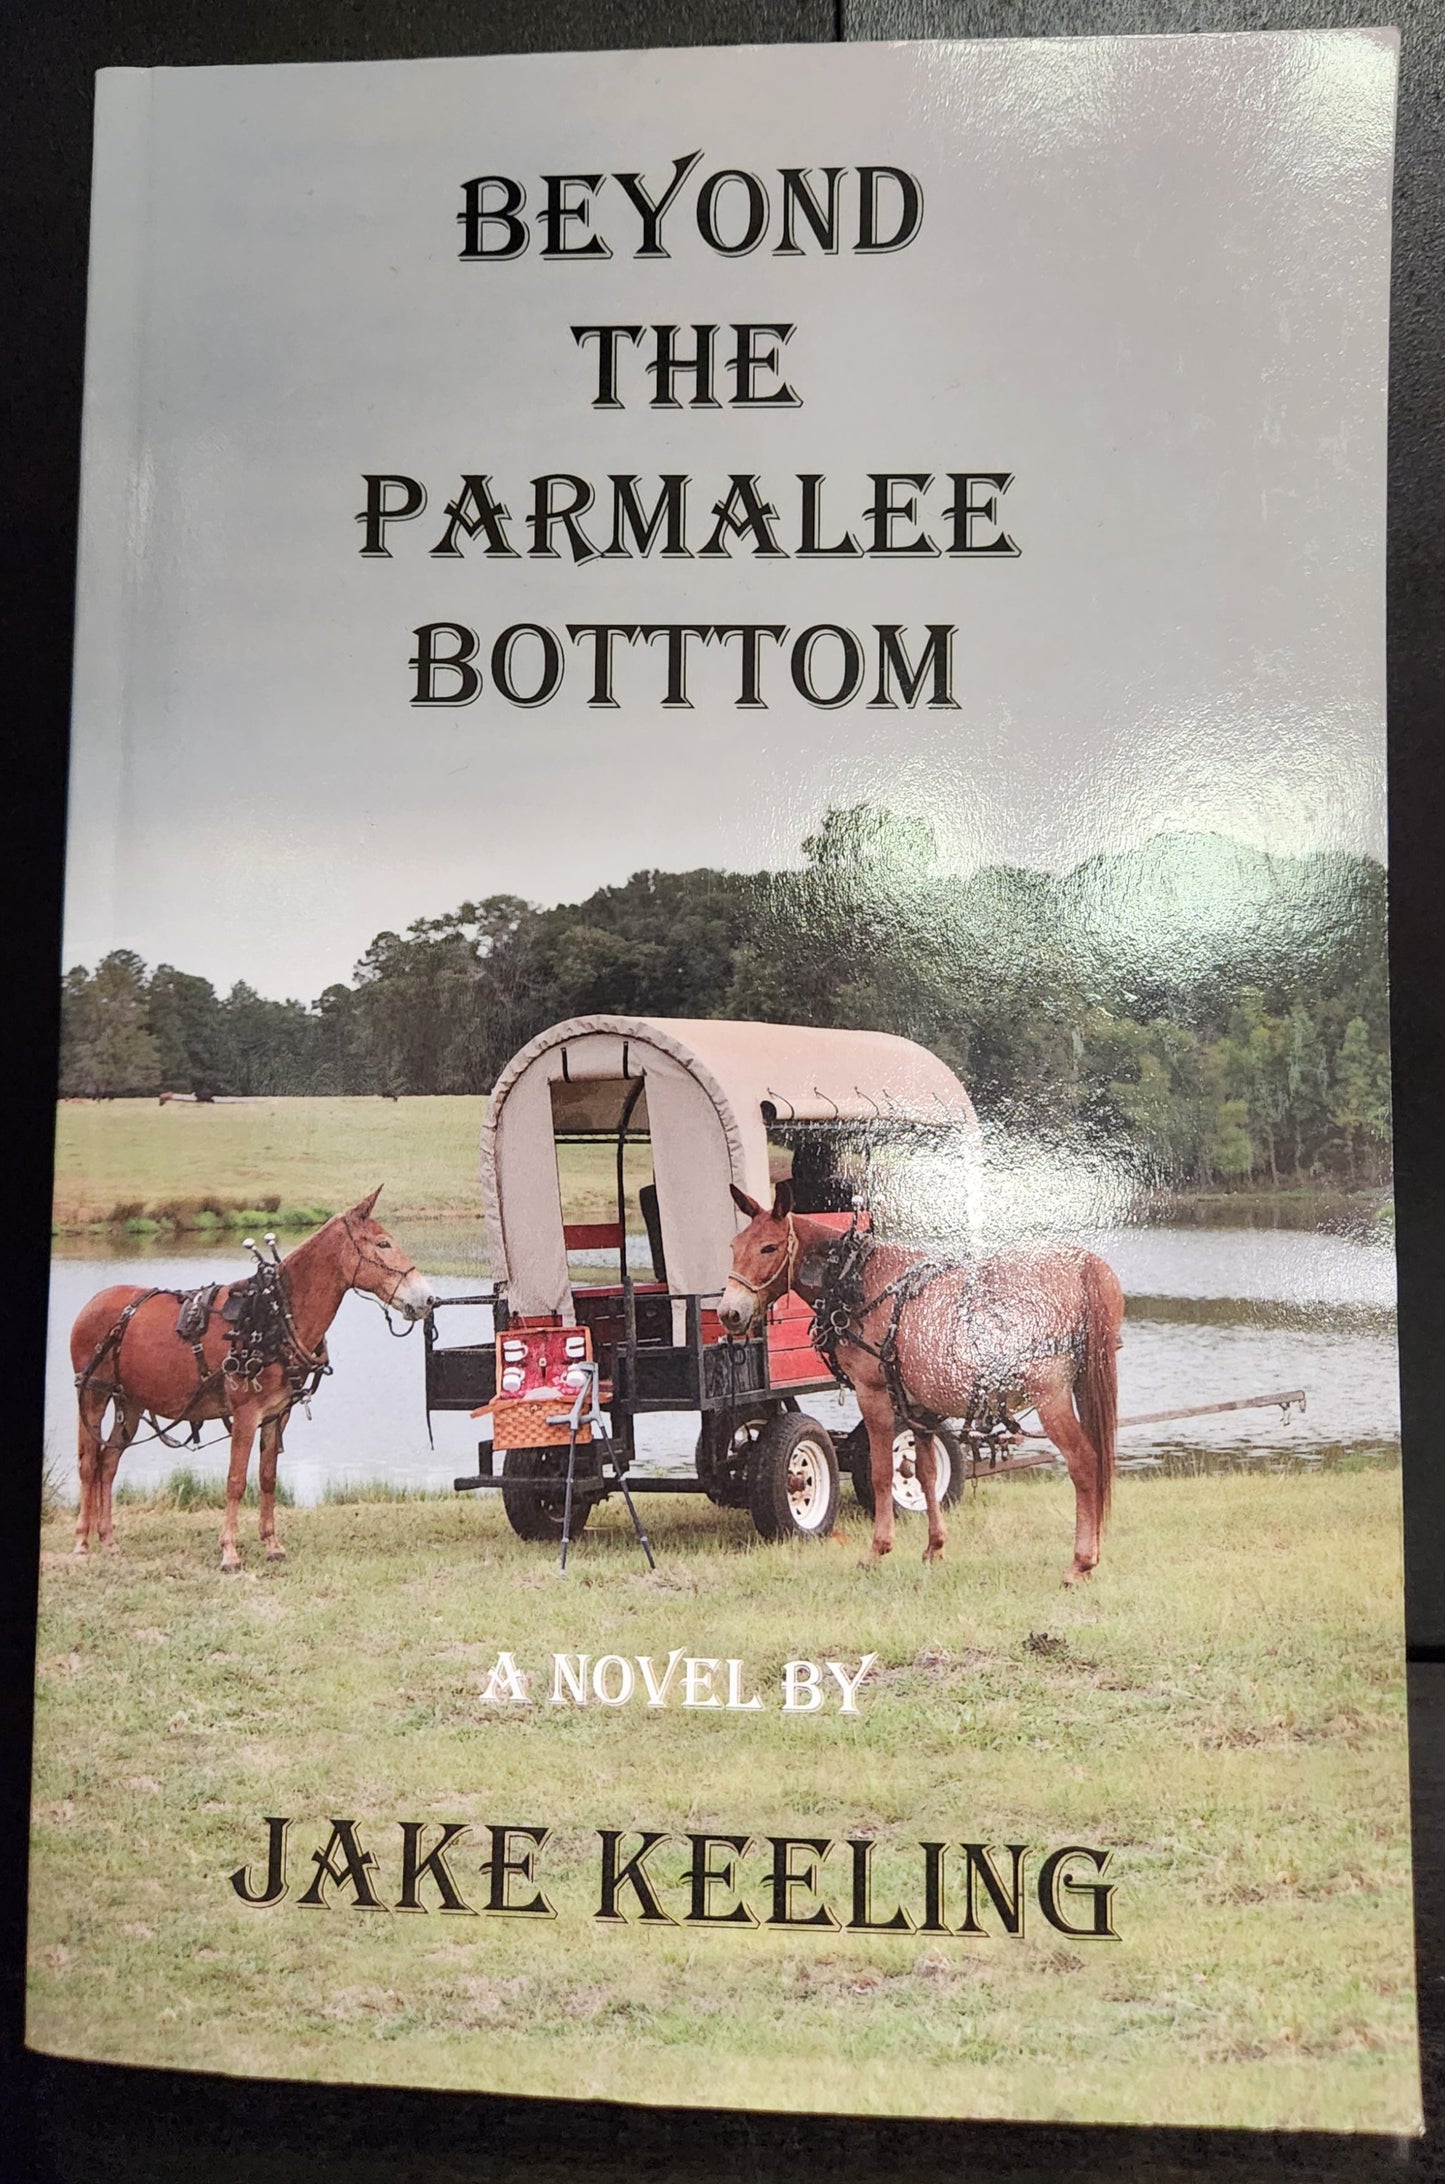 Beyond The Parmalee Bottom, by Jake Keeling